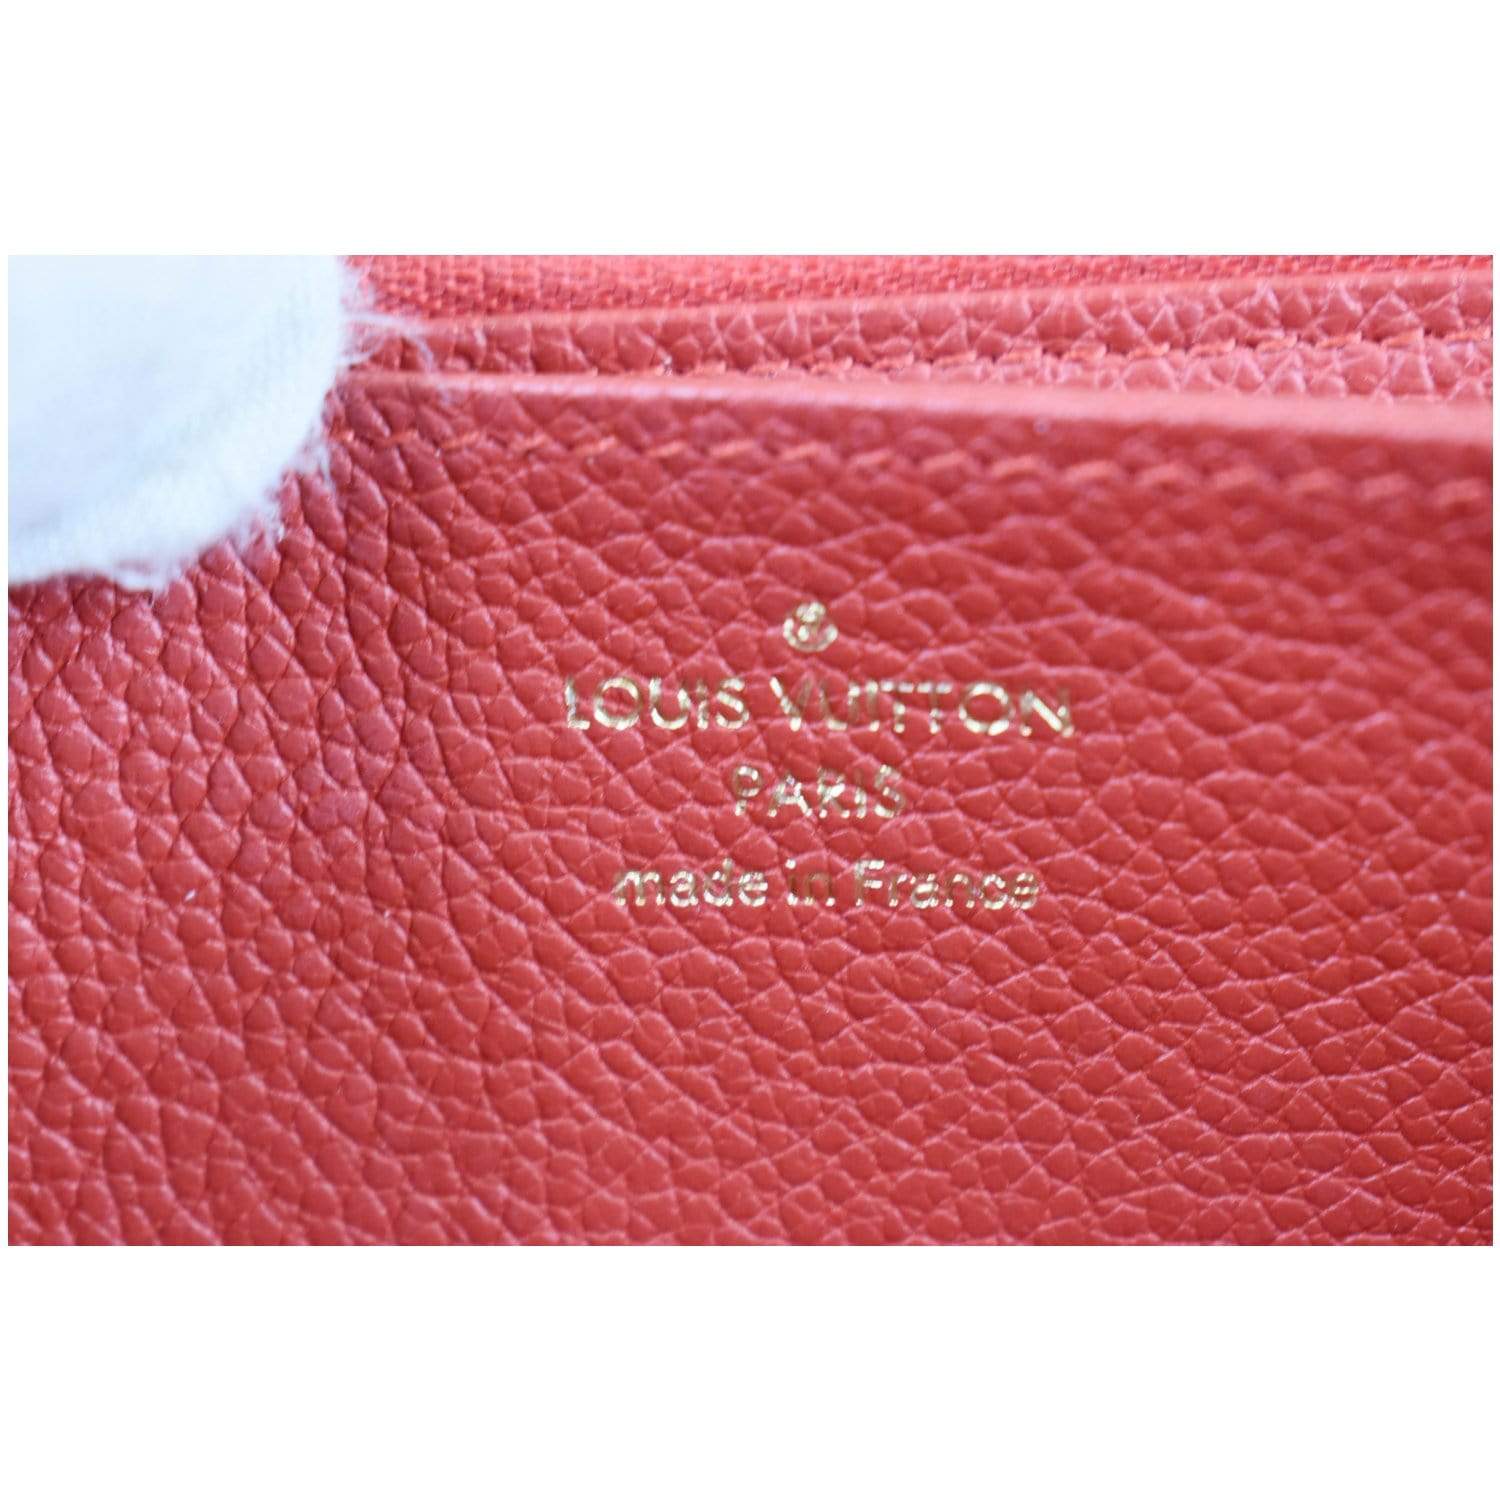 LOUIS VUITTON Zippy Wallet Long Monogram Empreinte Leather Red